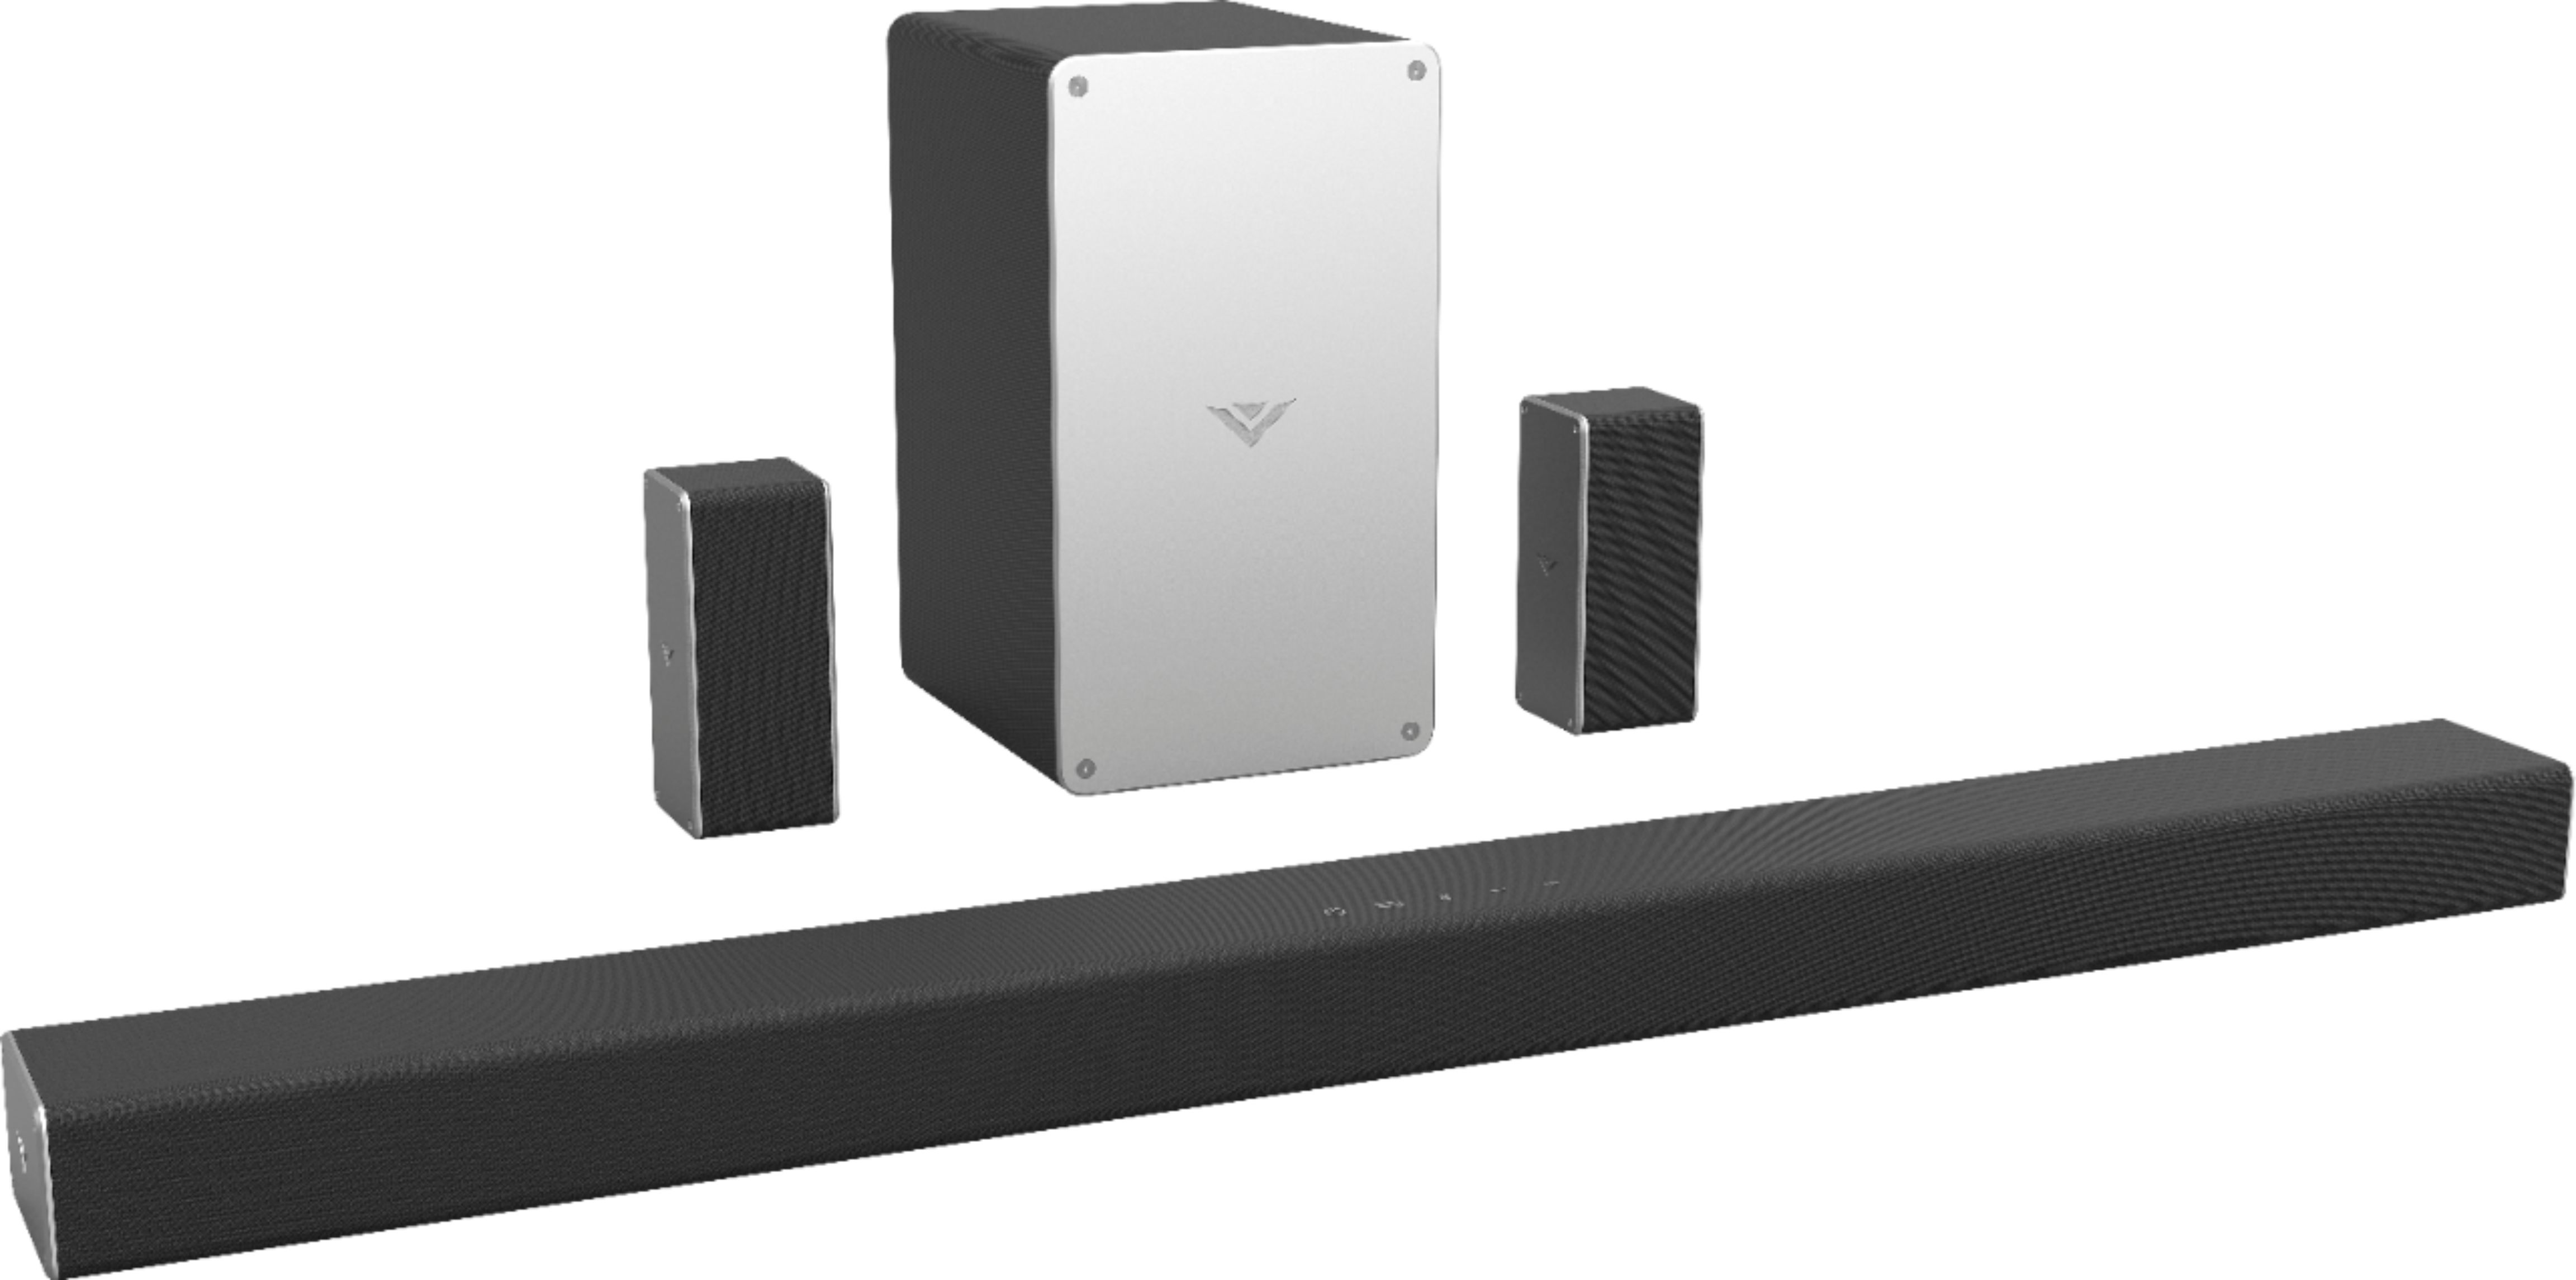 Best Buy: VIZIO SmartCast 5.1 Channel Sound Bar System with 5-1/4